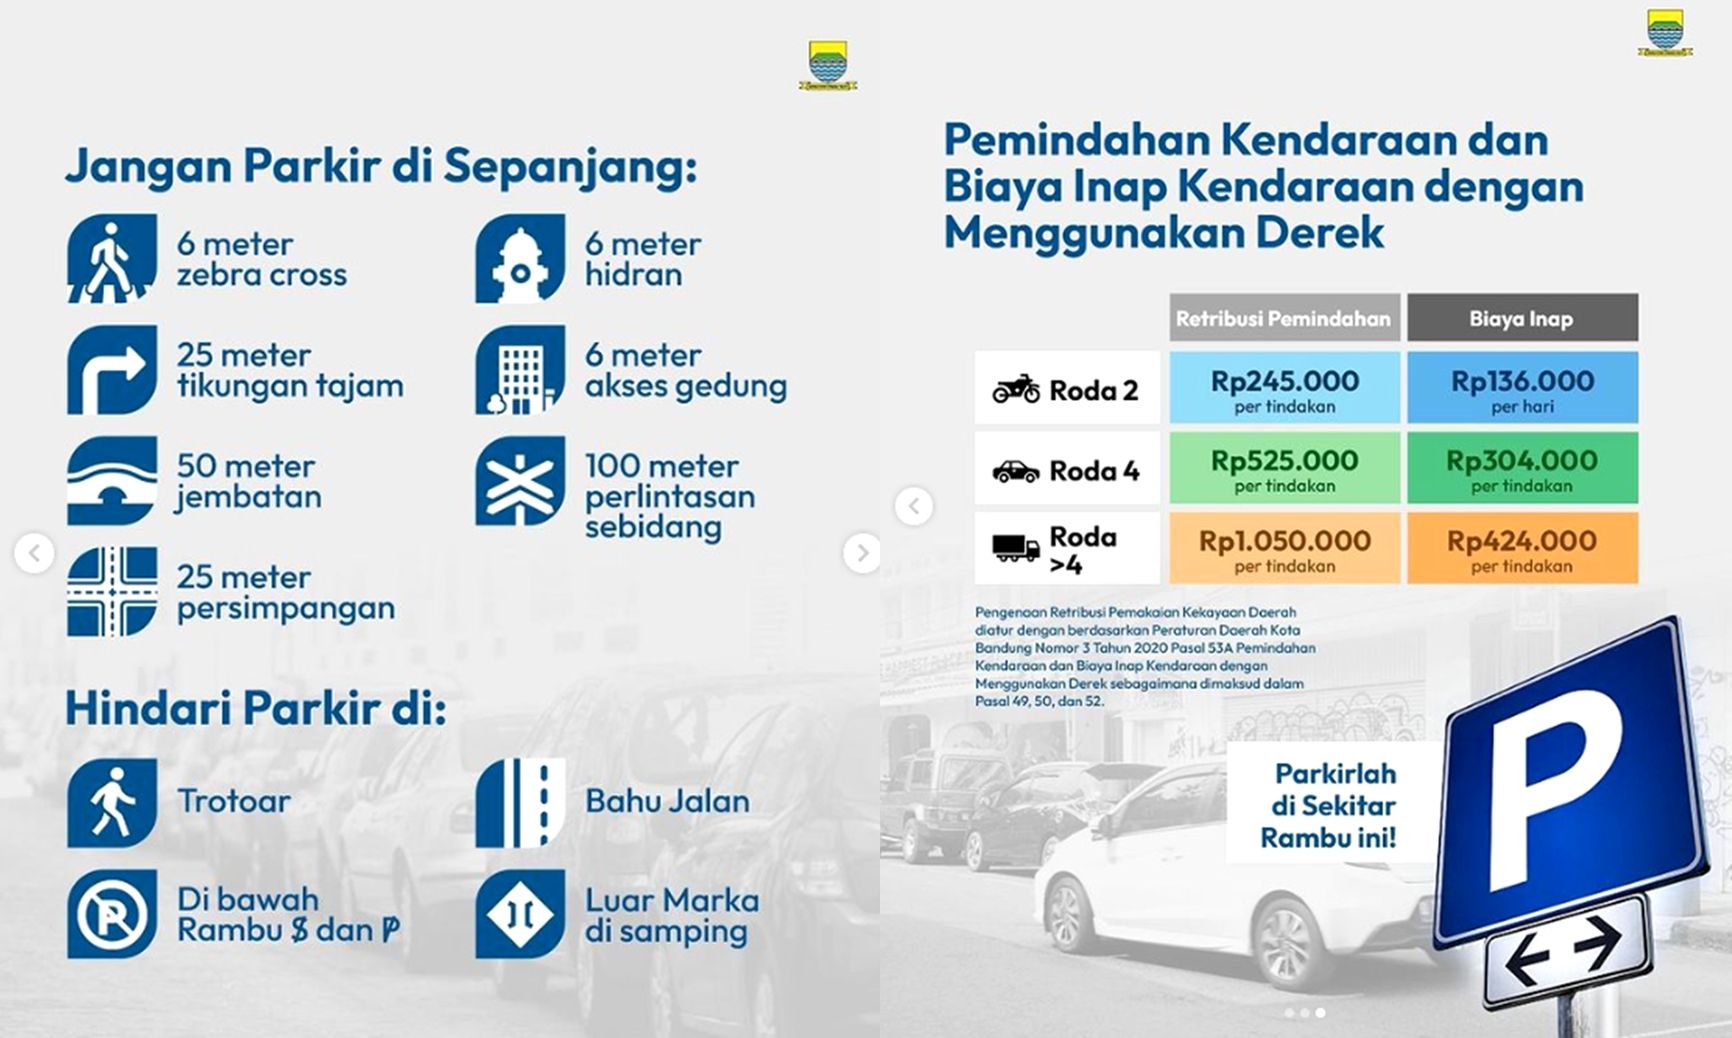 Ancaman tindakan dari pihak berwenang di Pemkot Bandung terhadap yang parkir sembarangan